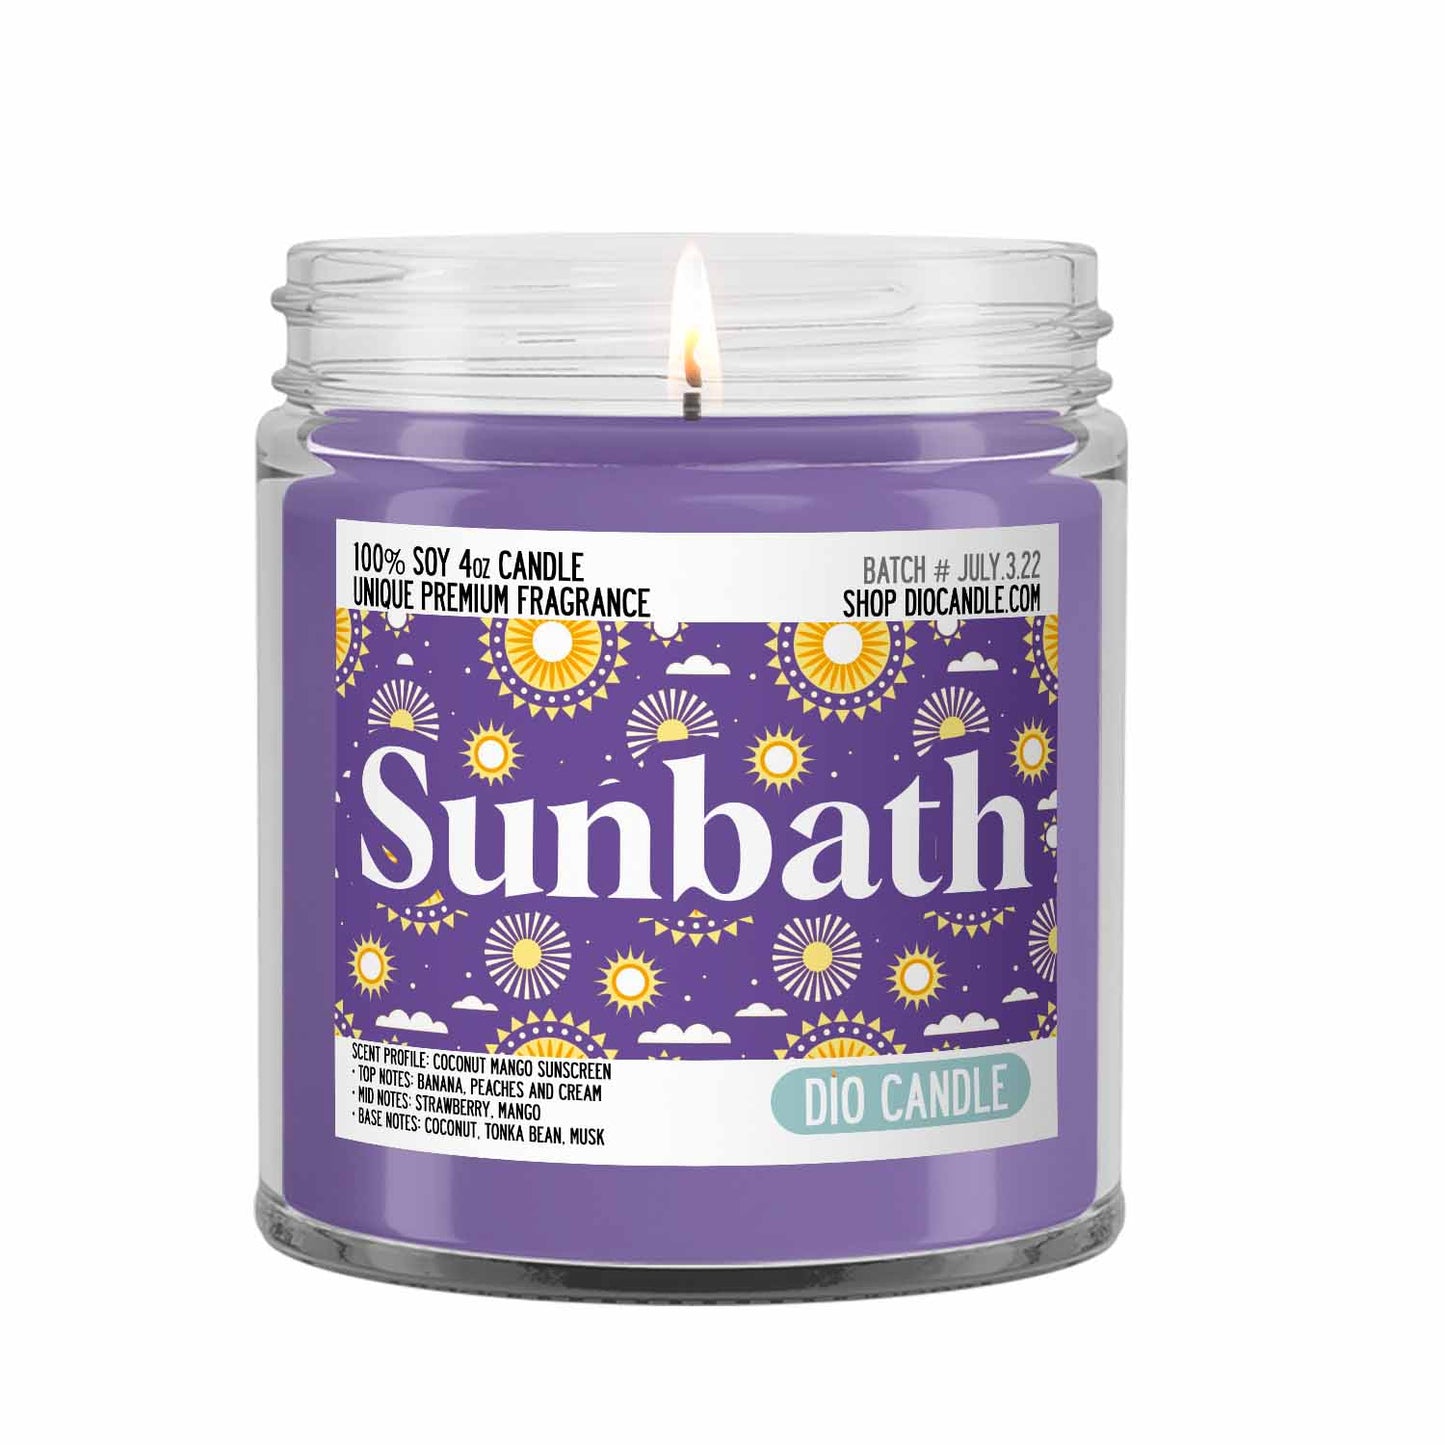 Sunbath Candle